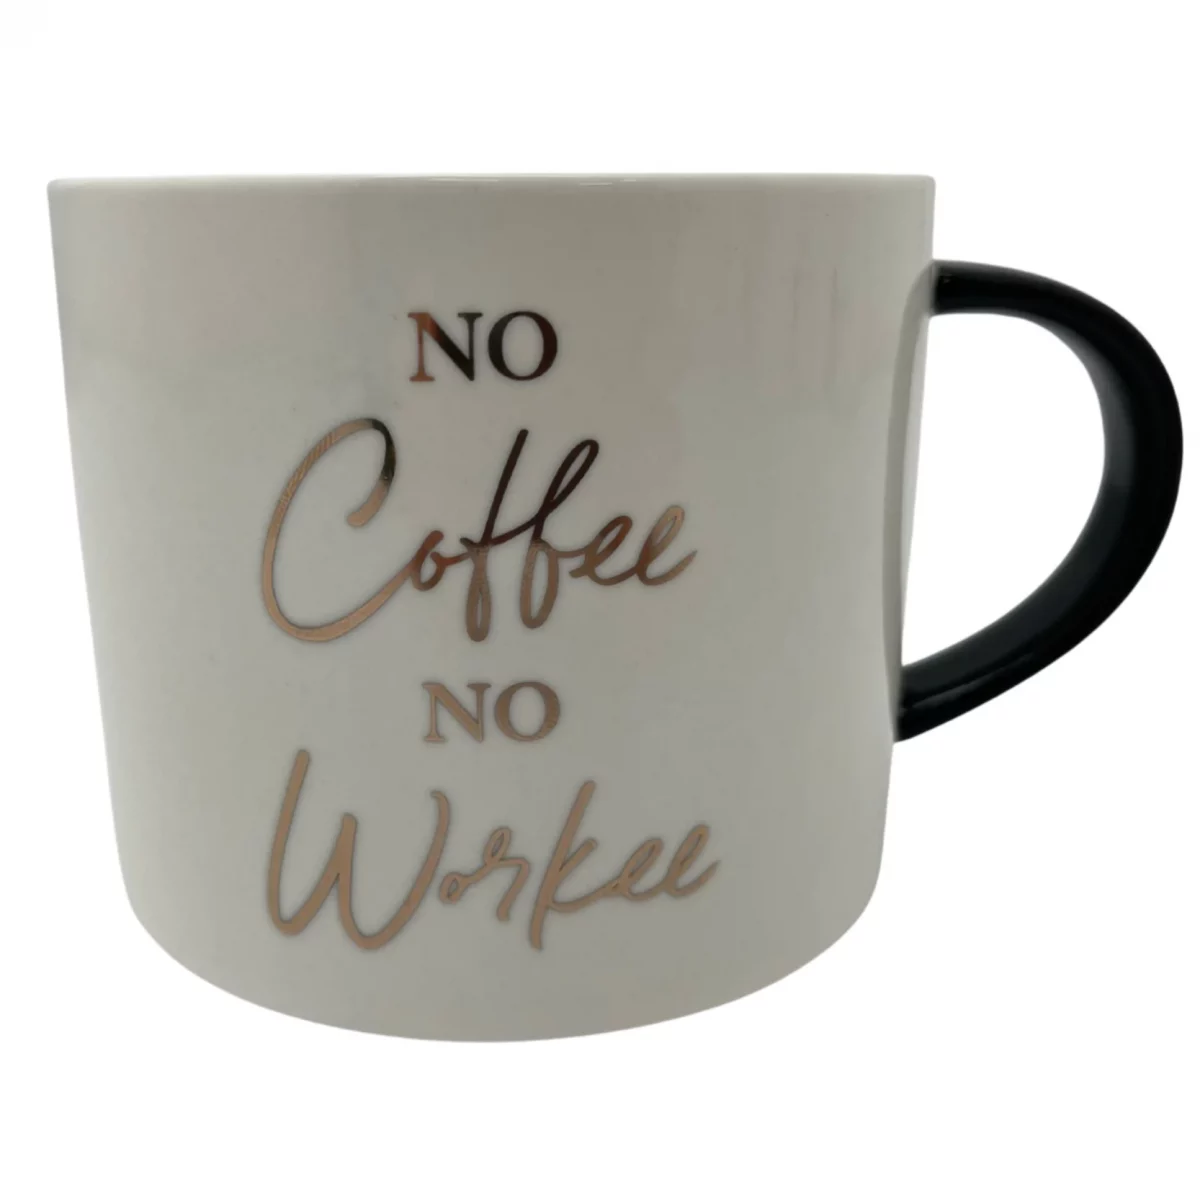 Harmon Porcelain Coffee Mug Set / 4 Piece Set / White and Black / Stackable Mug Set